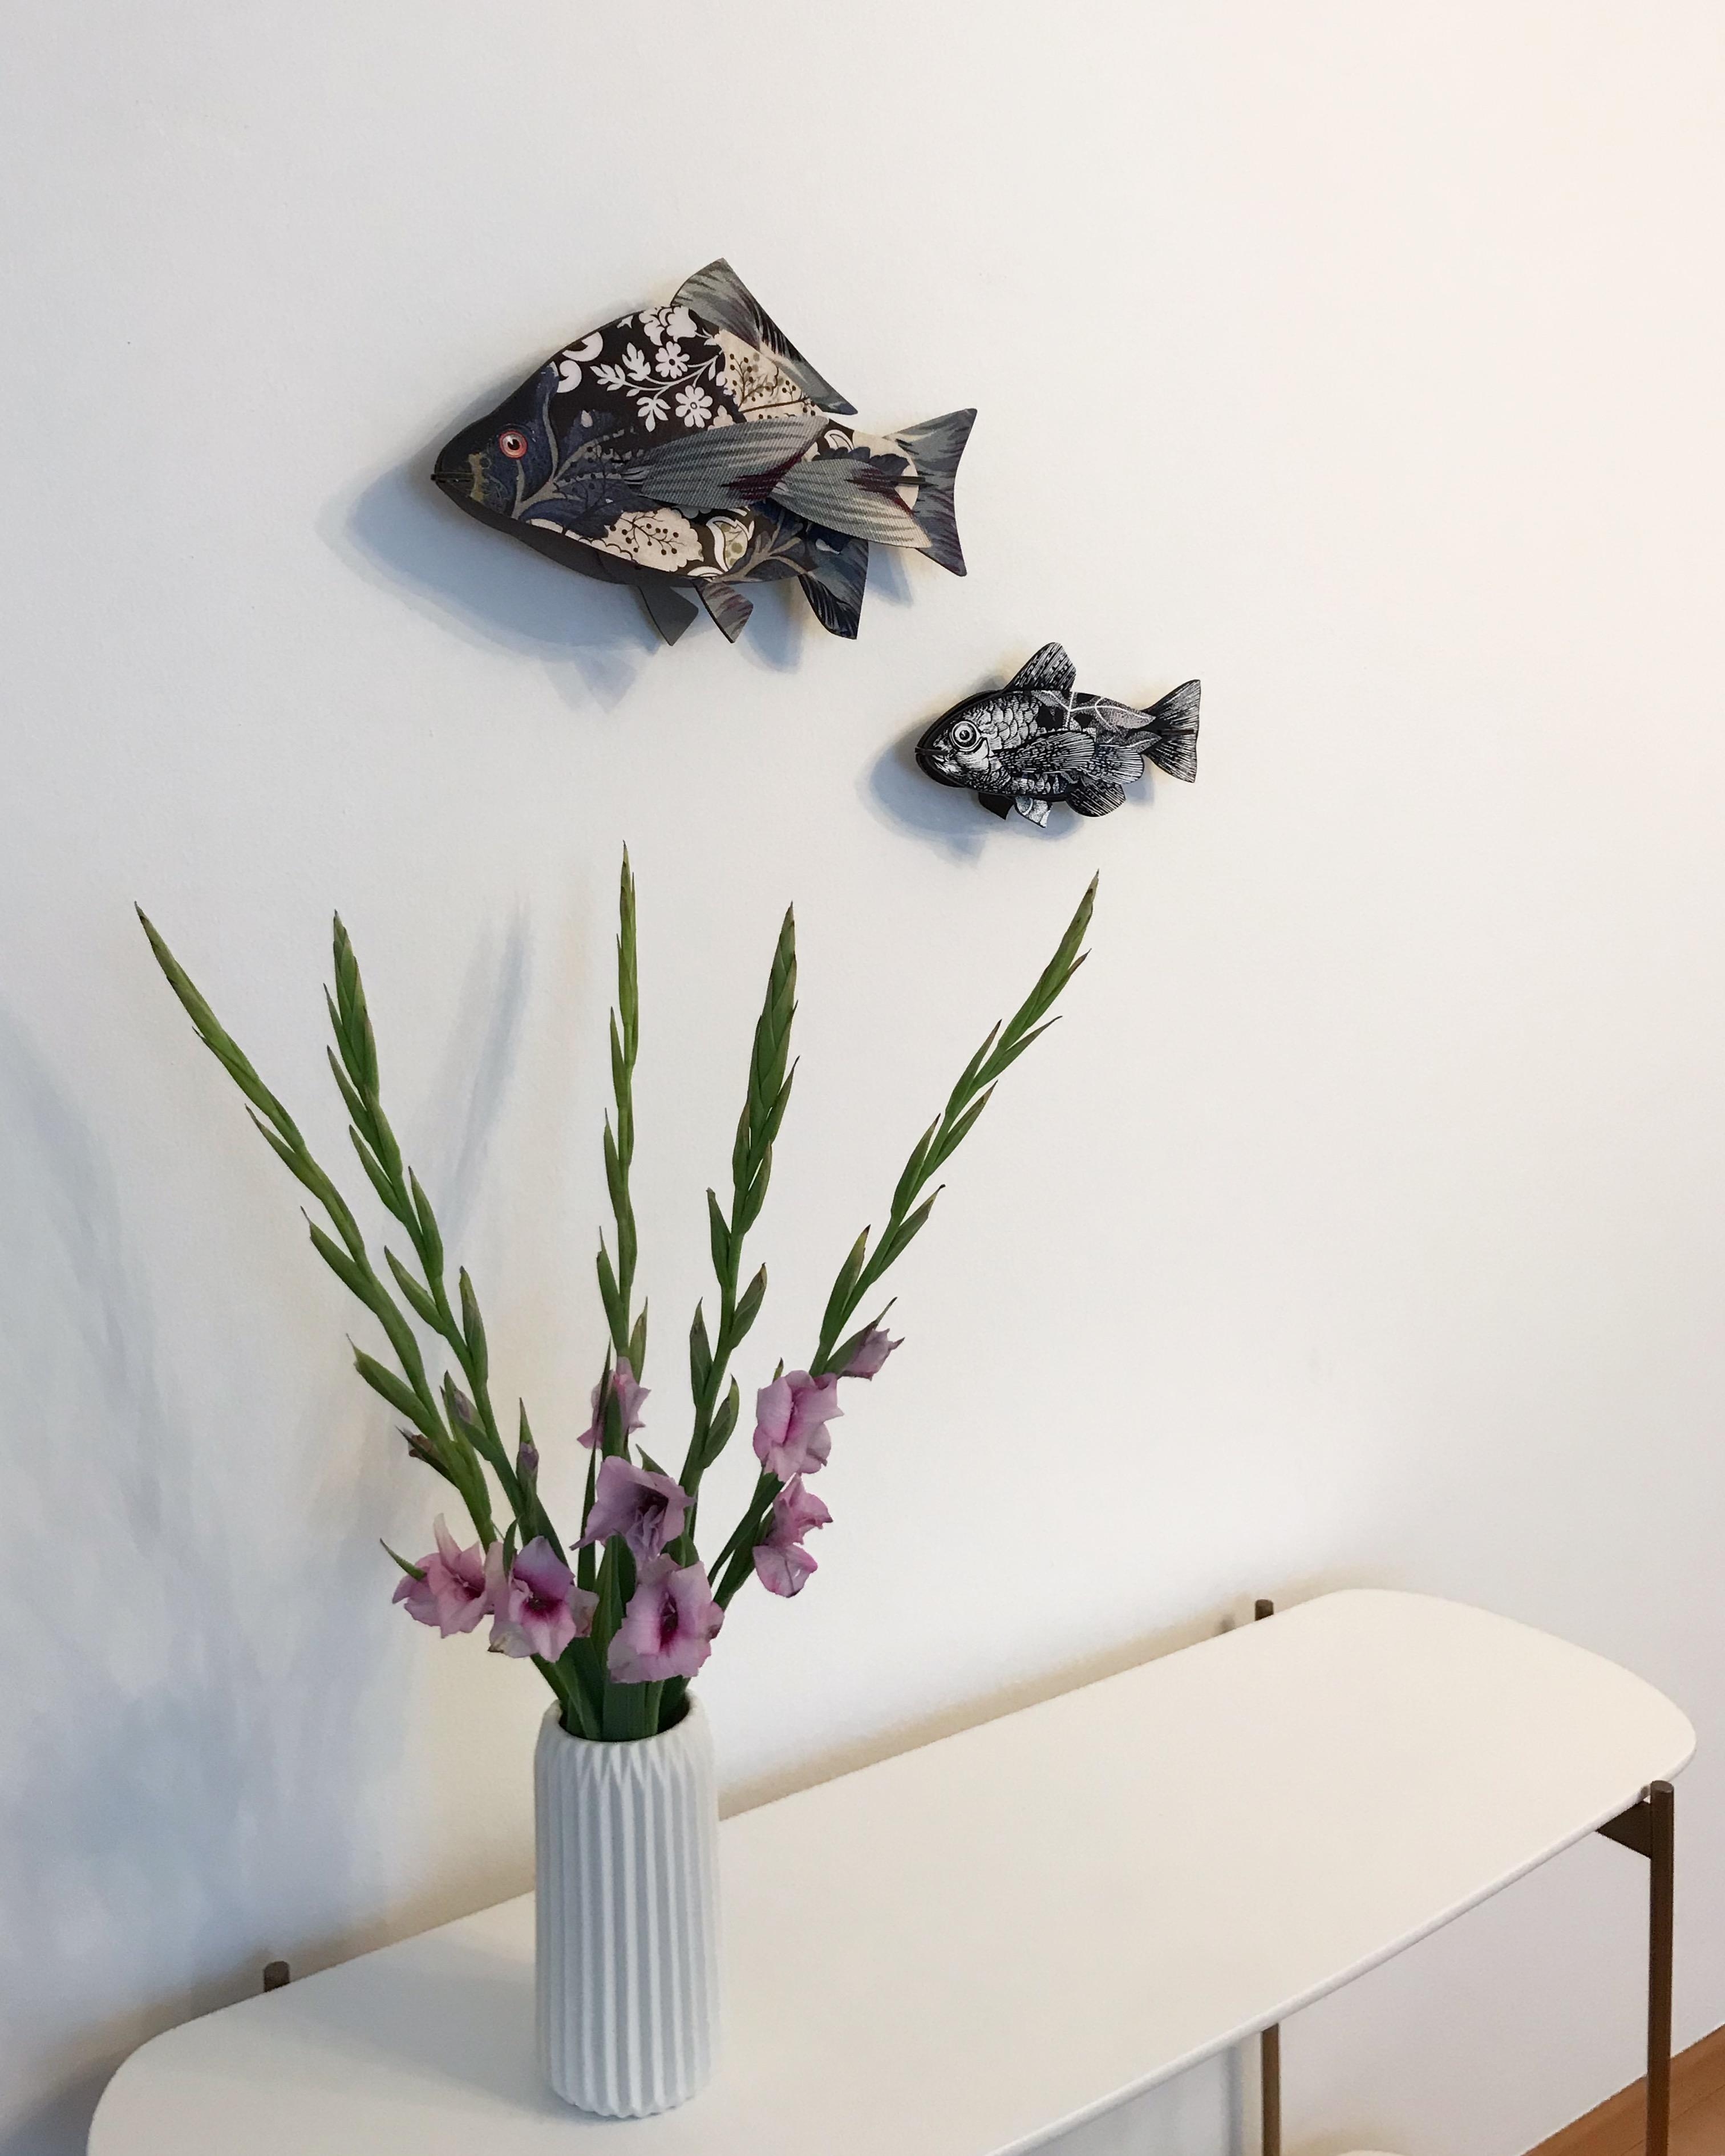 FISHONTHEWALL 
#shelf #fish #livingroom #happysunday